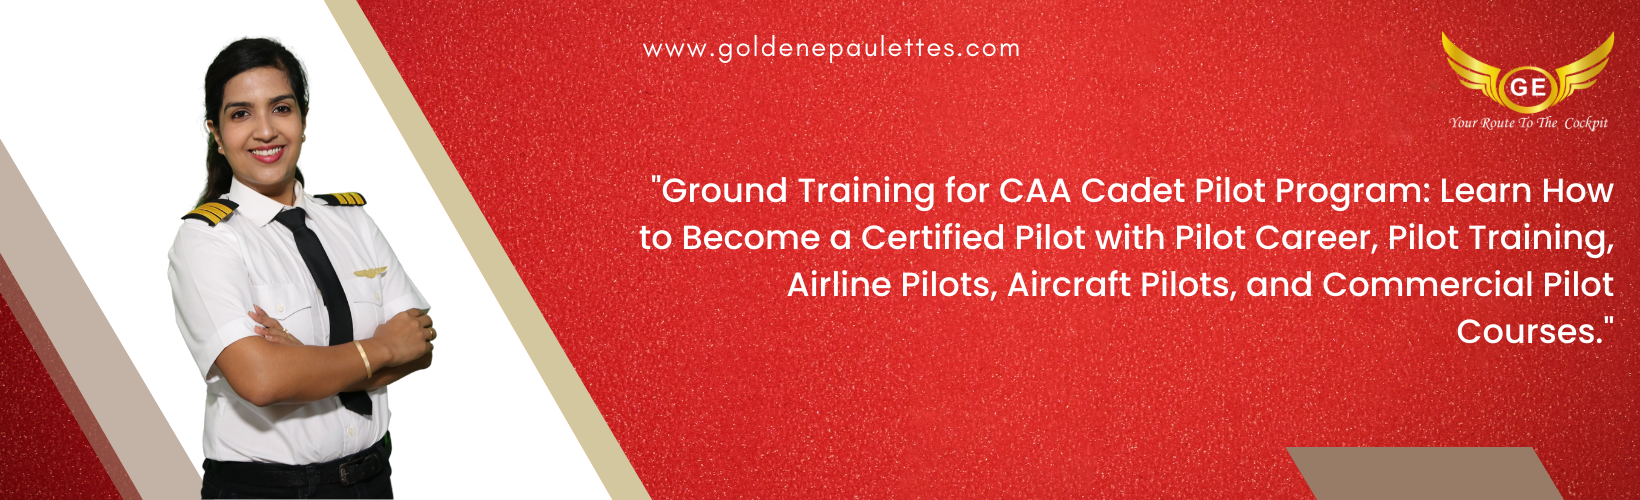 Ground Training for the CAA Cadet Pilot Program